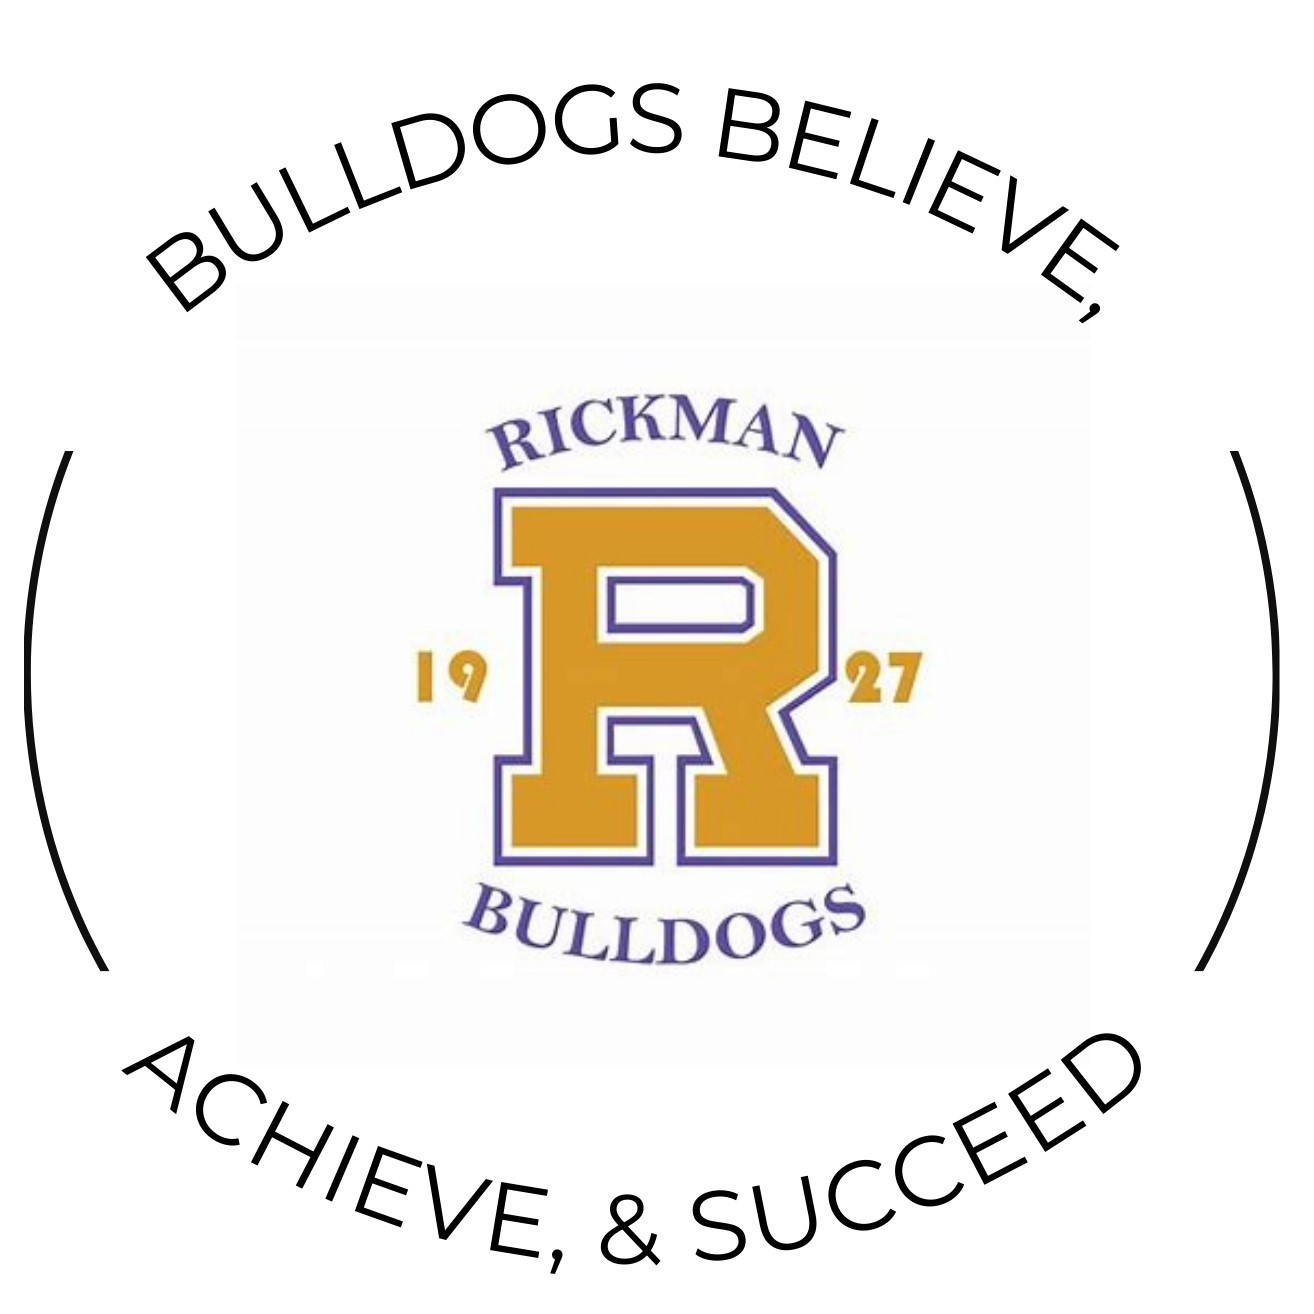 Bulldogs Believe Achieve and Succeed